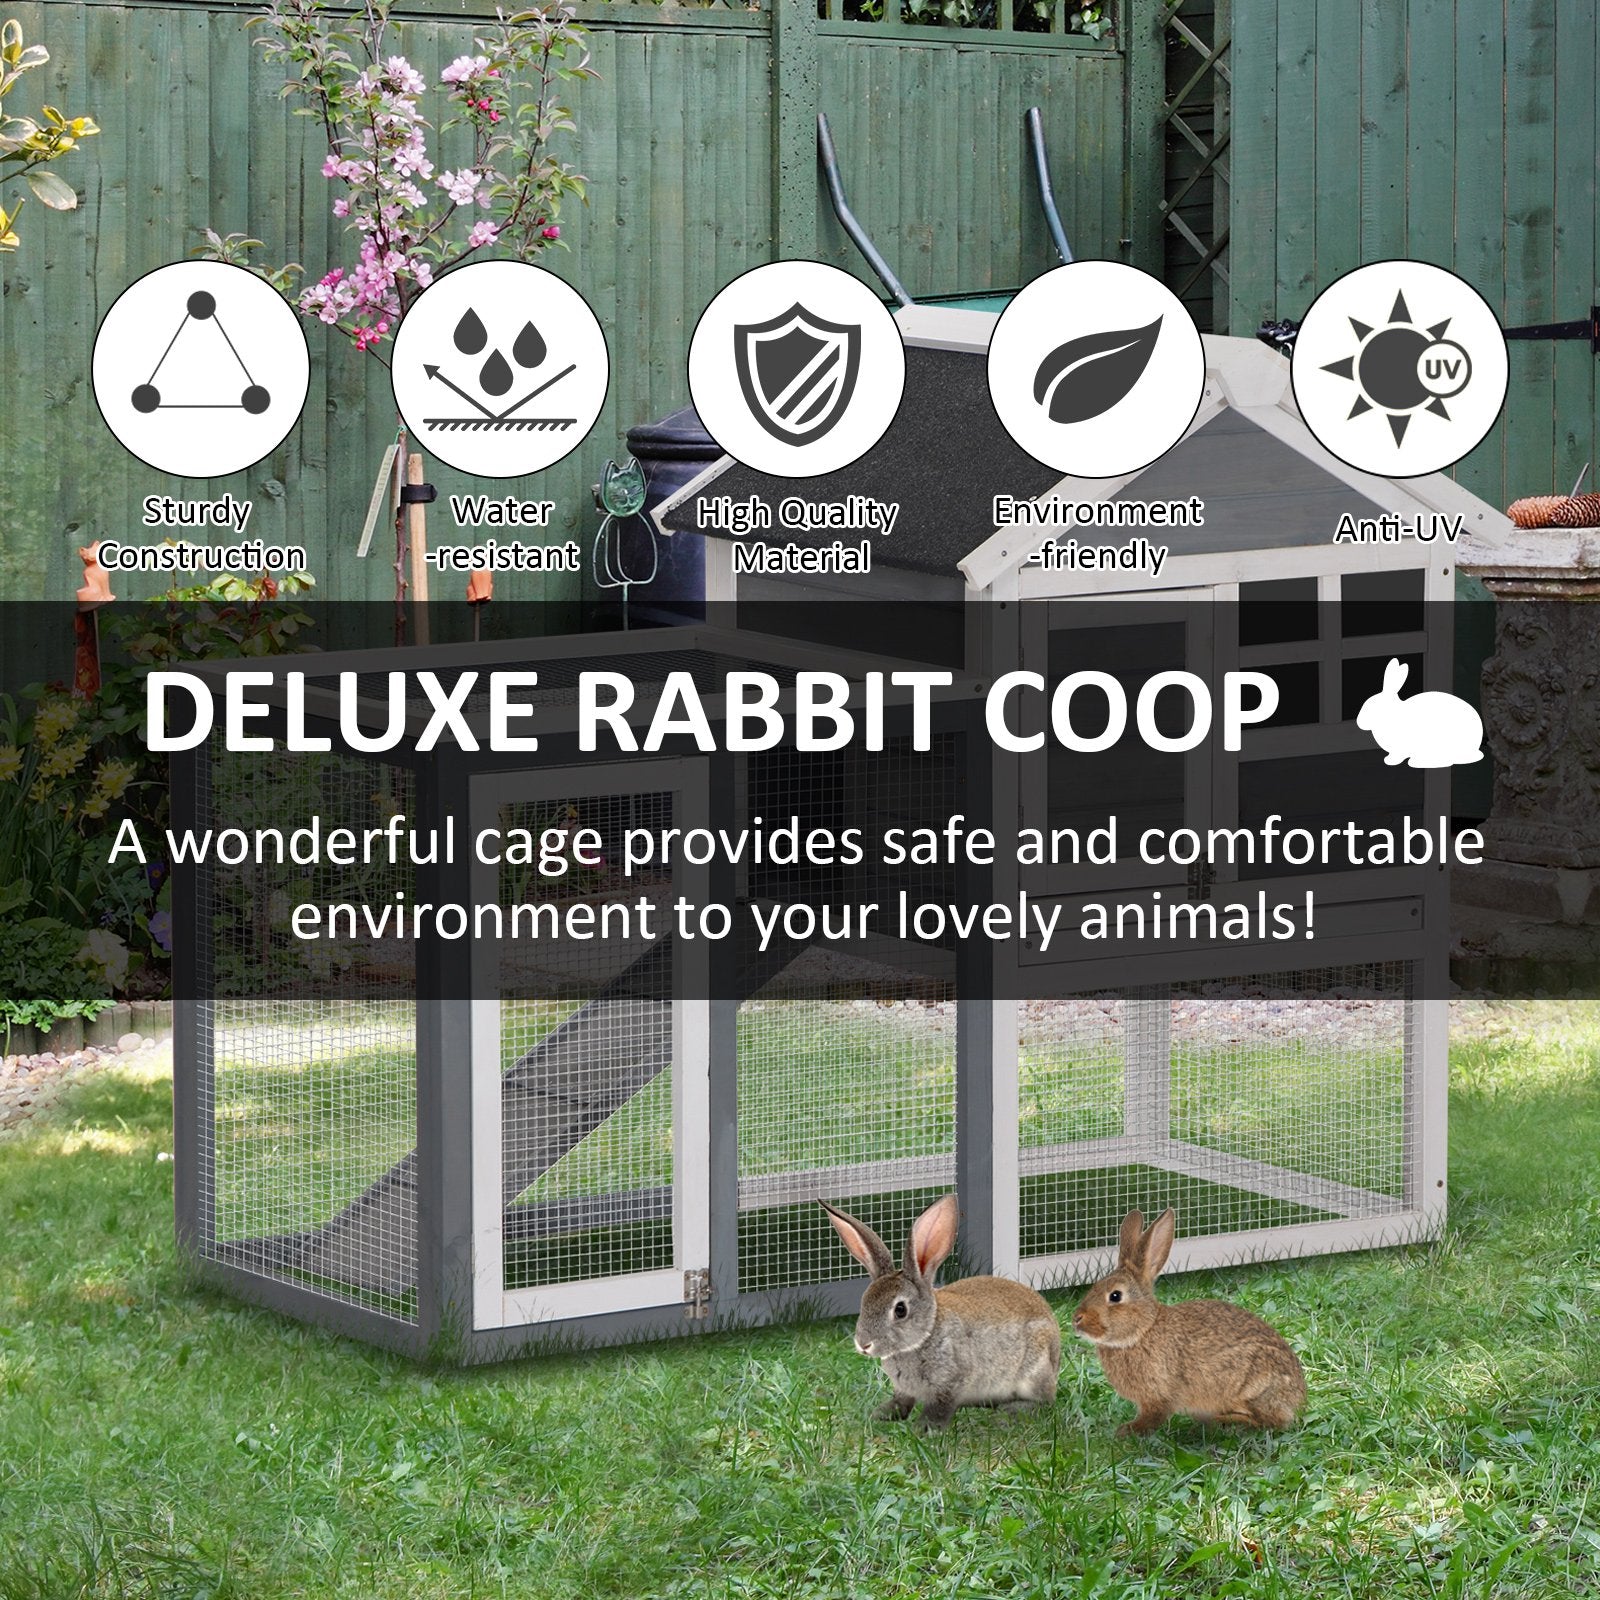 122cm Rabbit Hutch Cage Bunny House Wooden Habitat Pet Small Animal w/ Tray Ramp